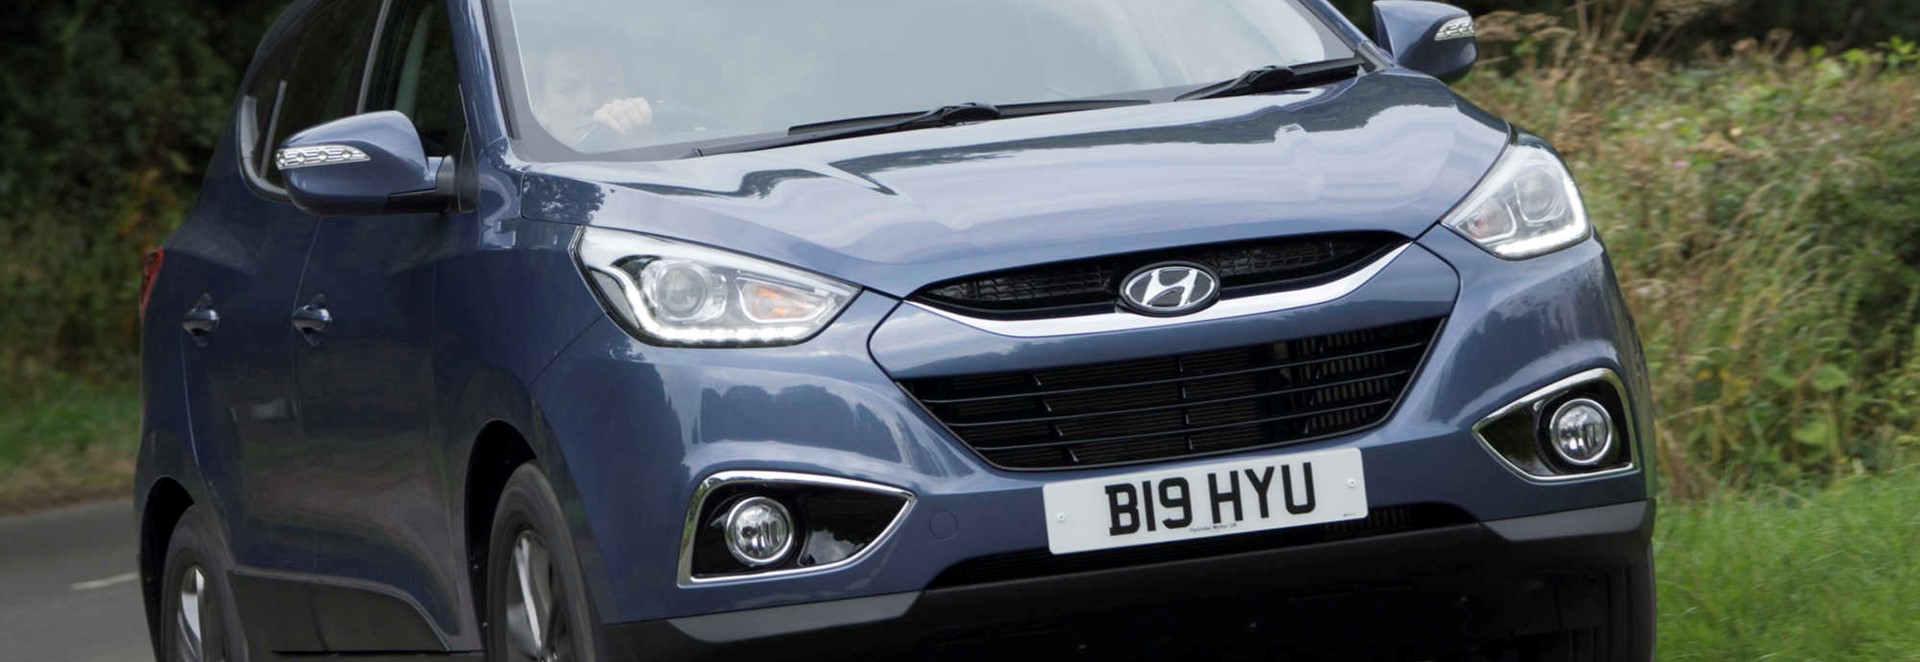 Hyundai ix35 crossover review  Car Keys